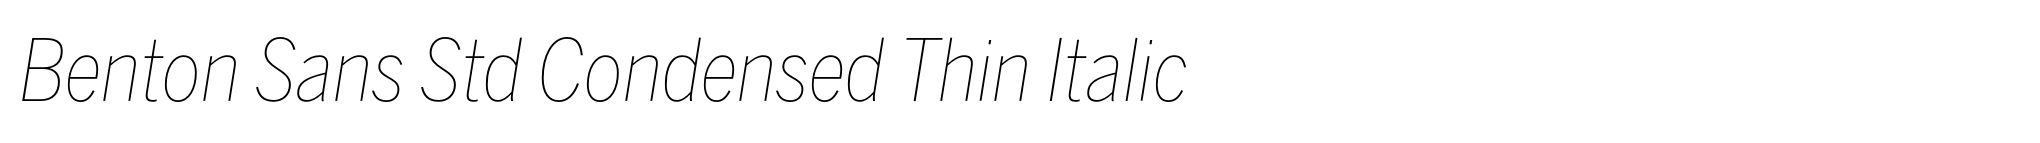 Benton Sans Std Condensed Thin Italic image